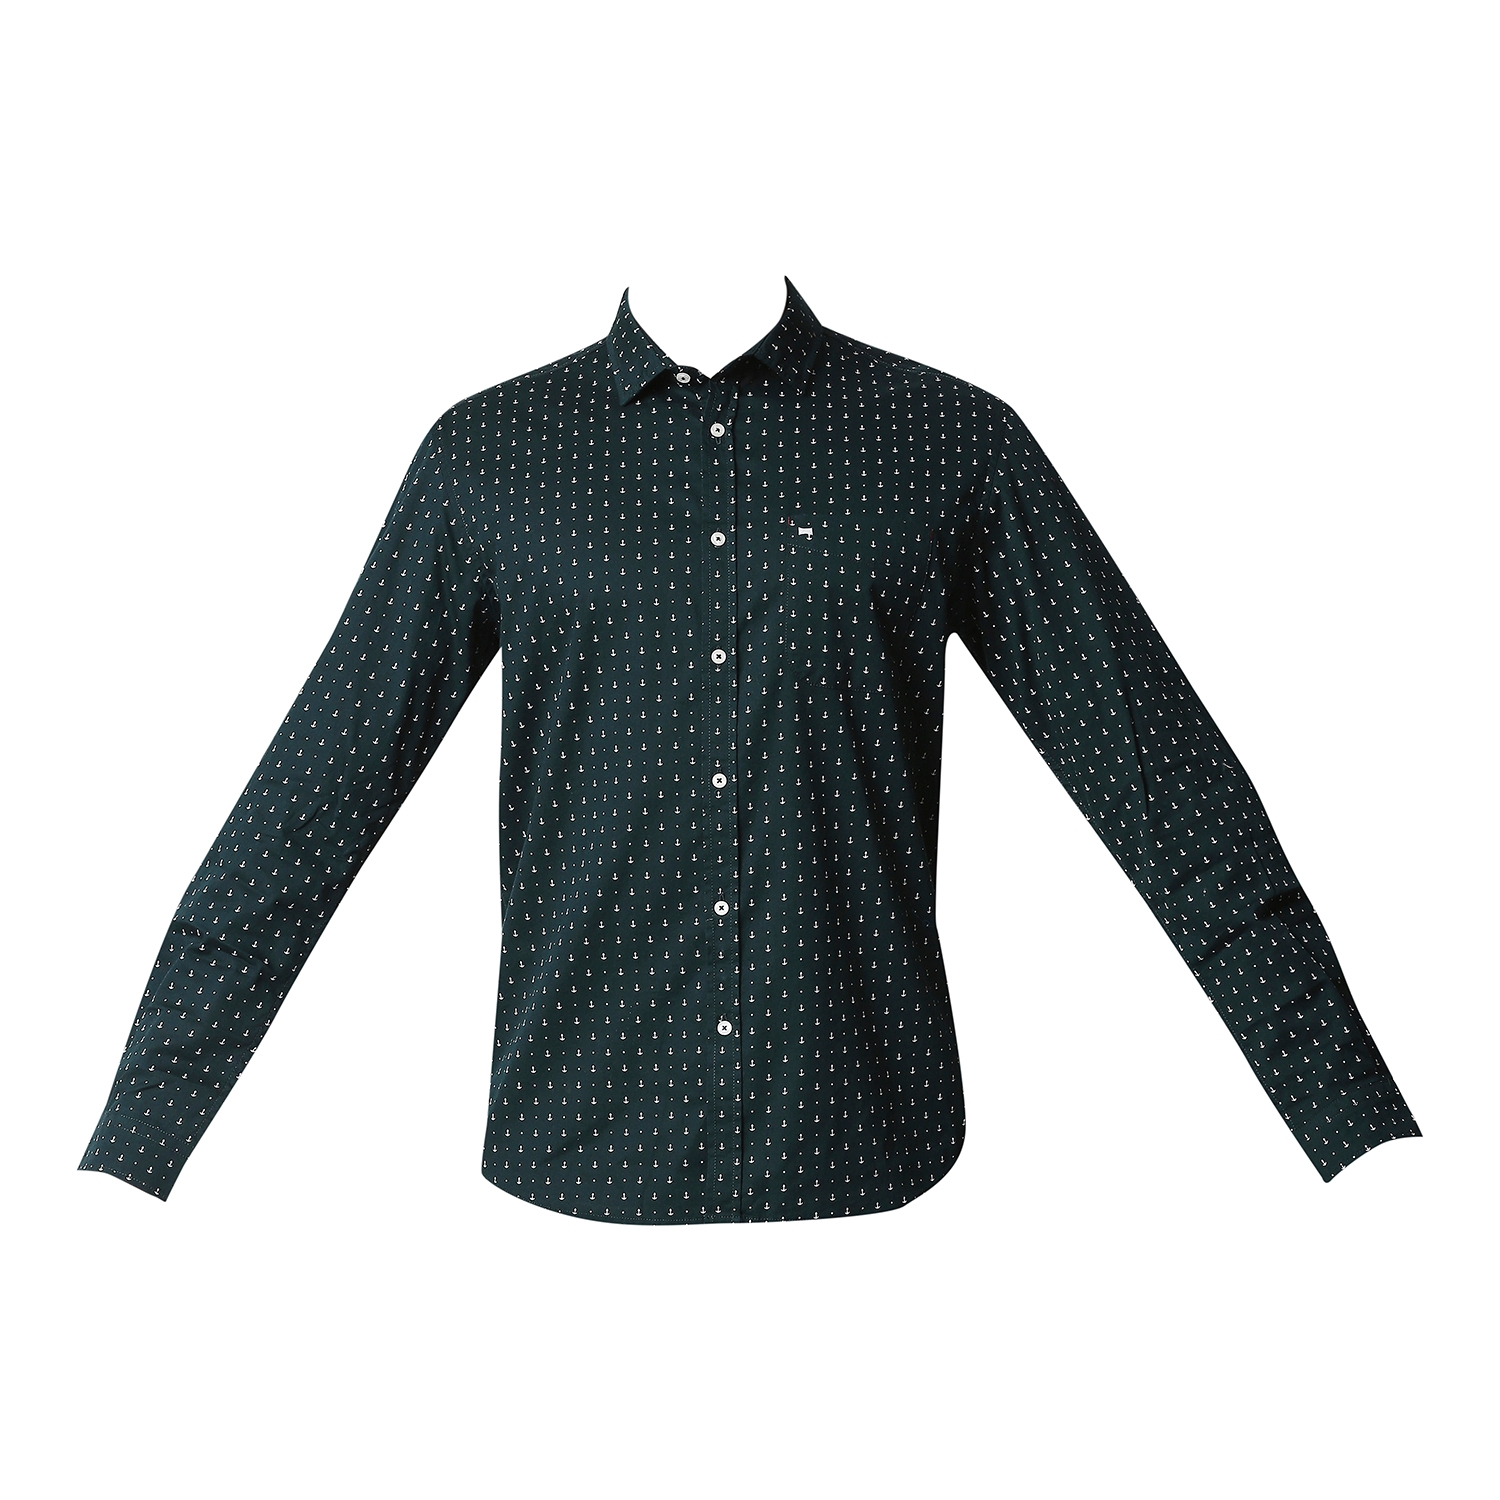 Basics | Men's Green Cotton Printed Casual Shirt 5